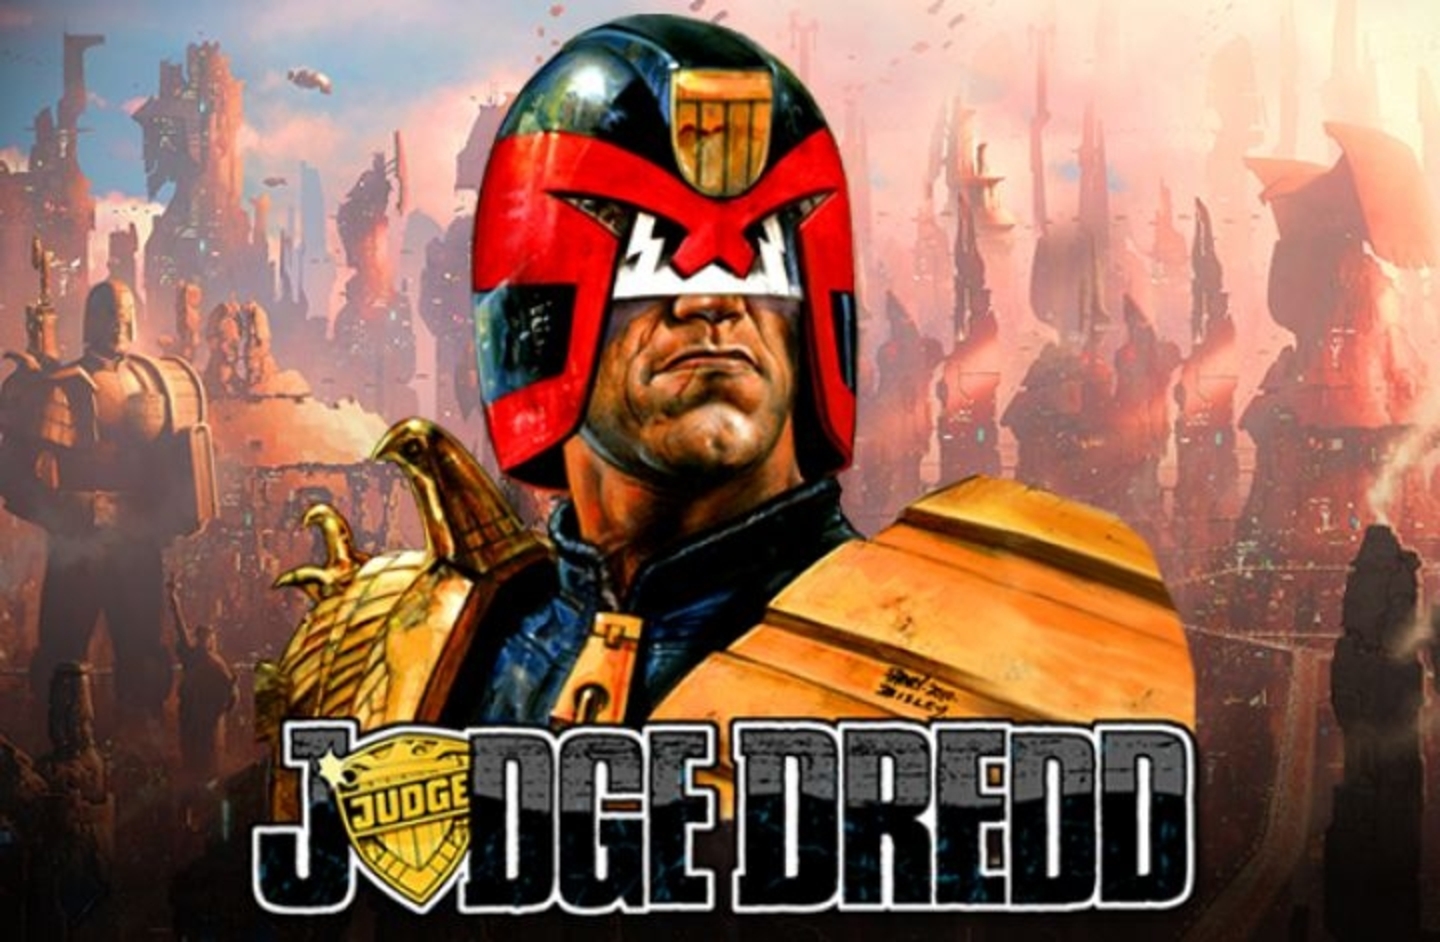 Judge Dredd demo